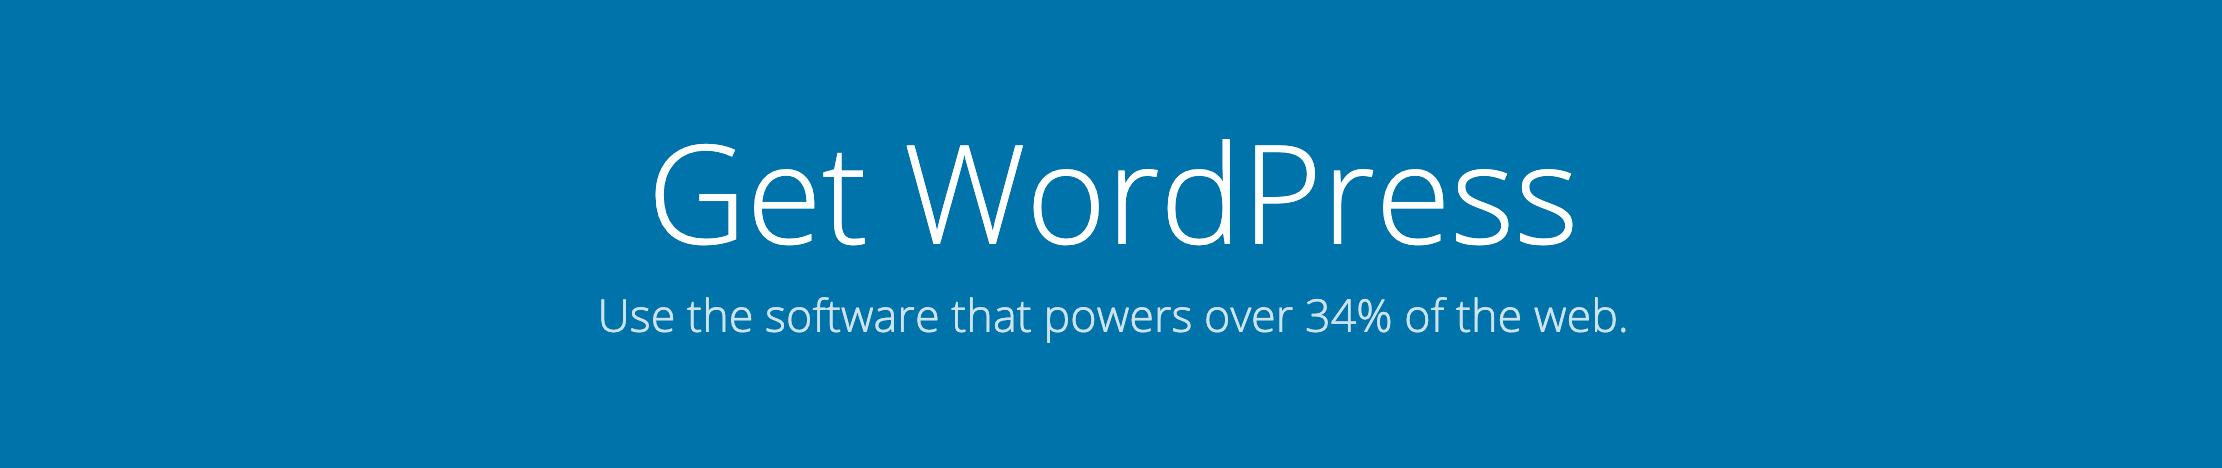 WordPress是一個偉大的志願者管理系統